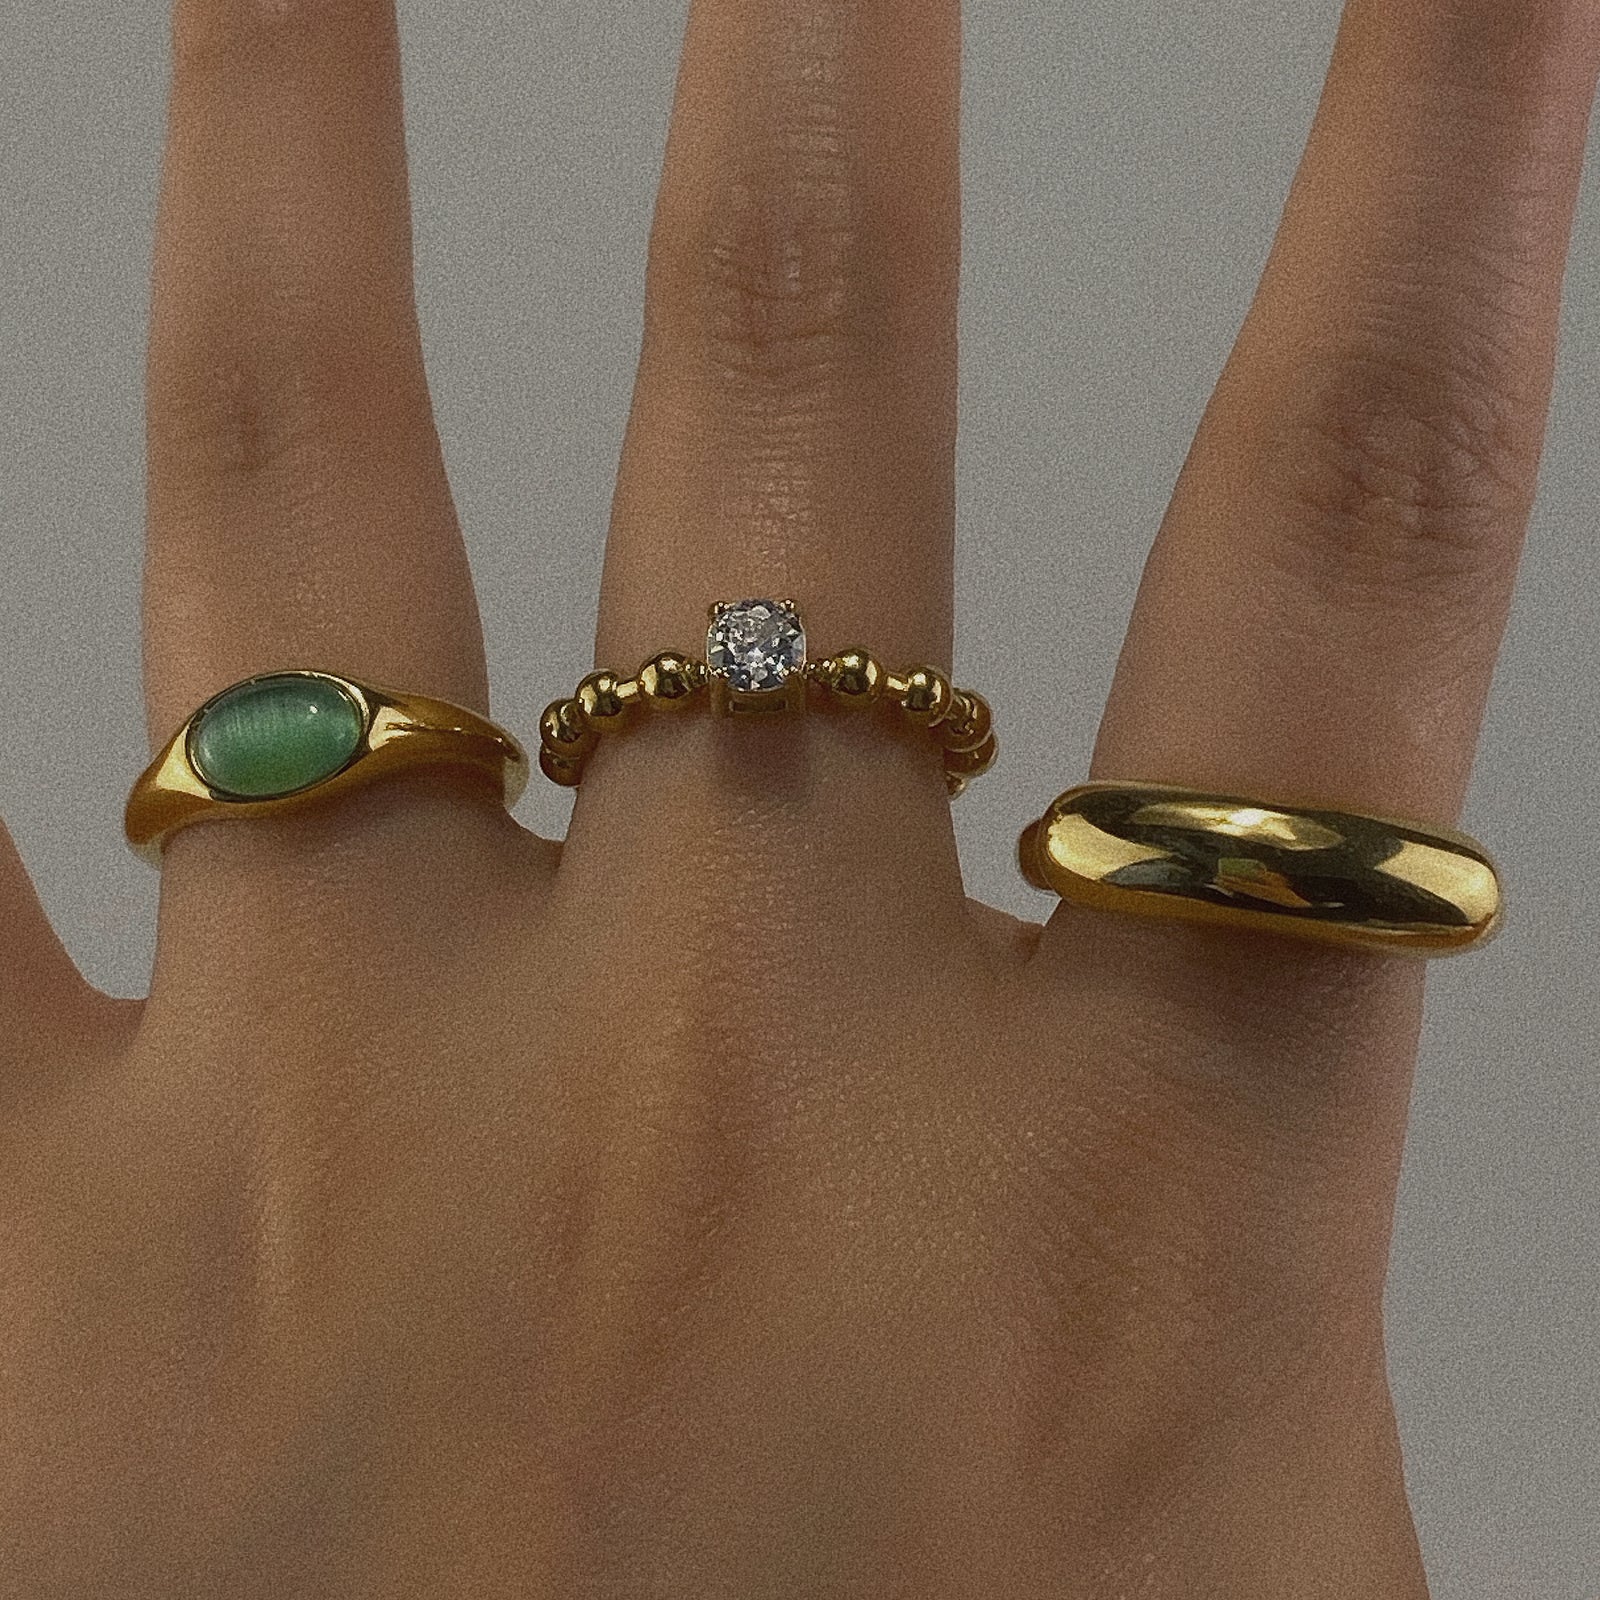 Meideya Jewelry gold rings